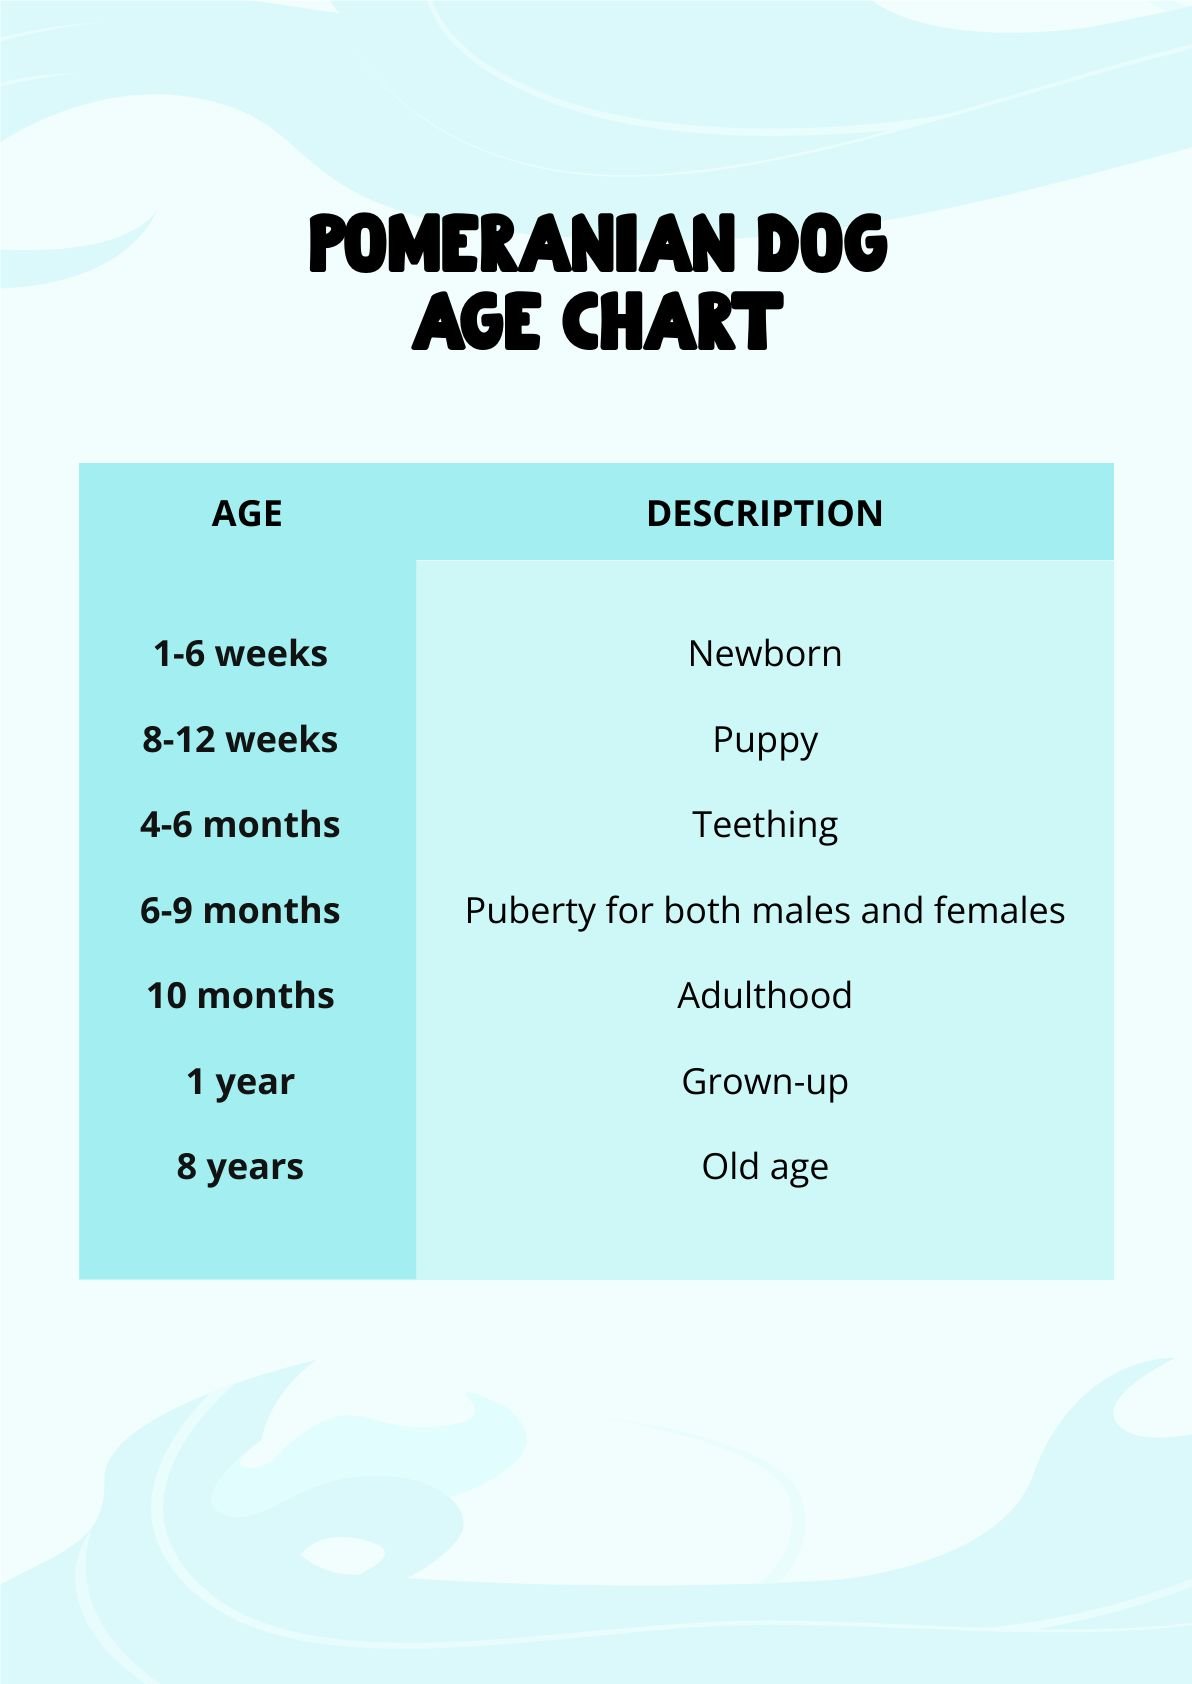 Pomeranian Dog Age Chart in PDF